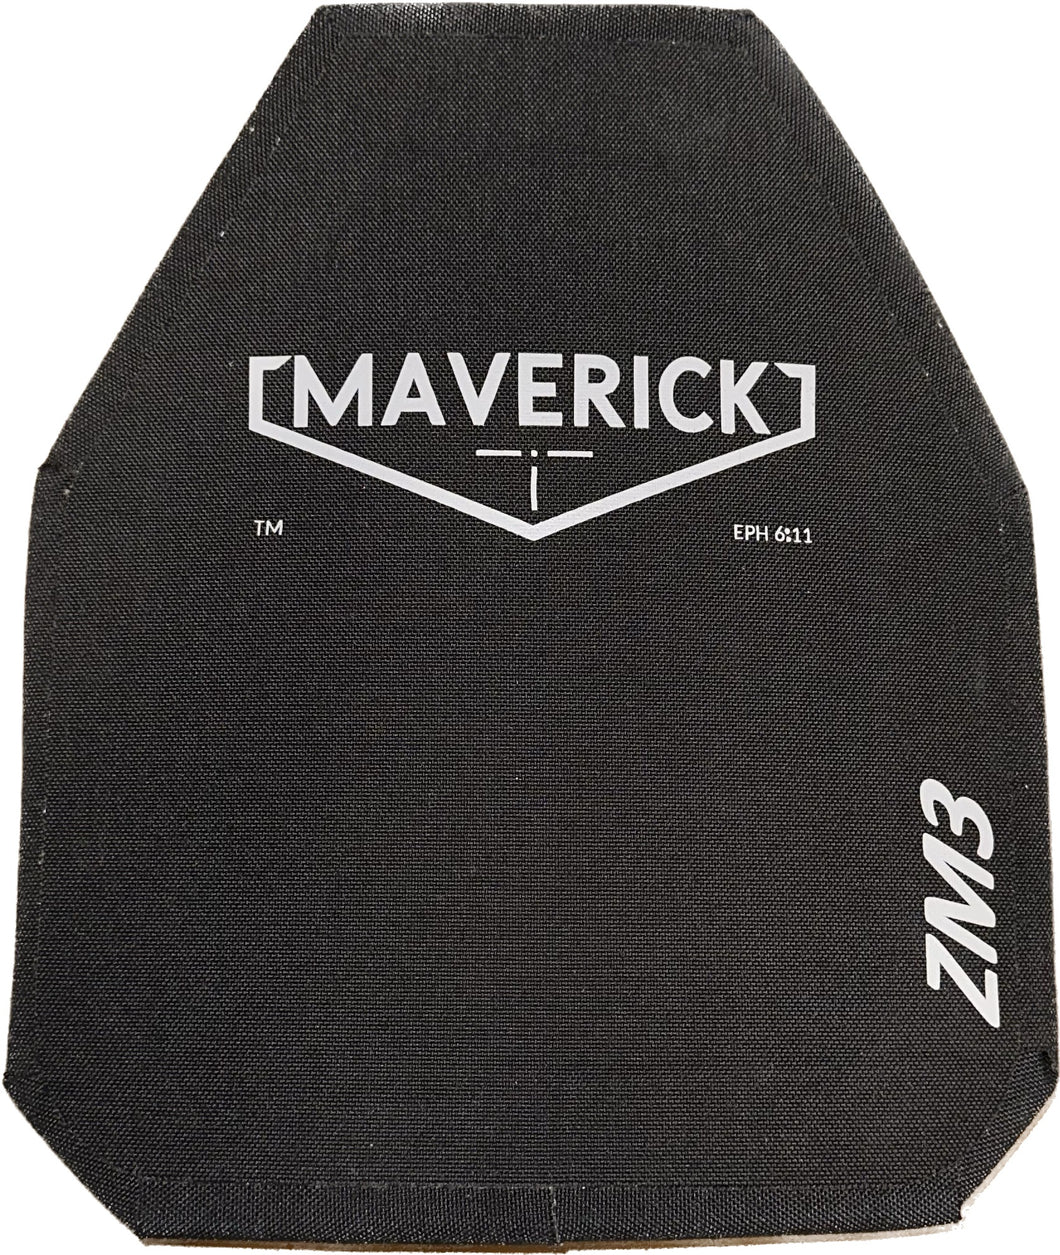 Maverick Tactical Level 4 Certified Body Armor Plate